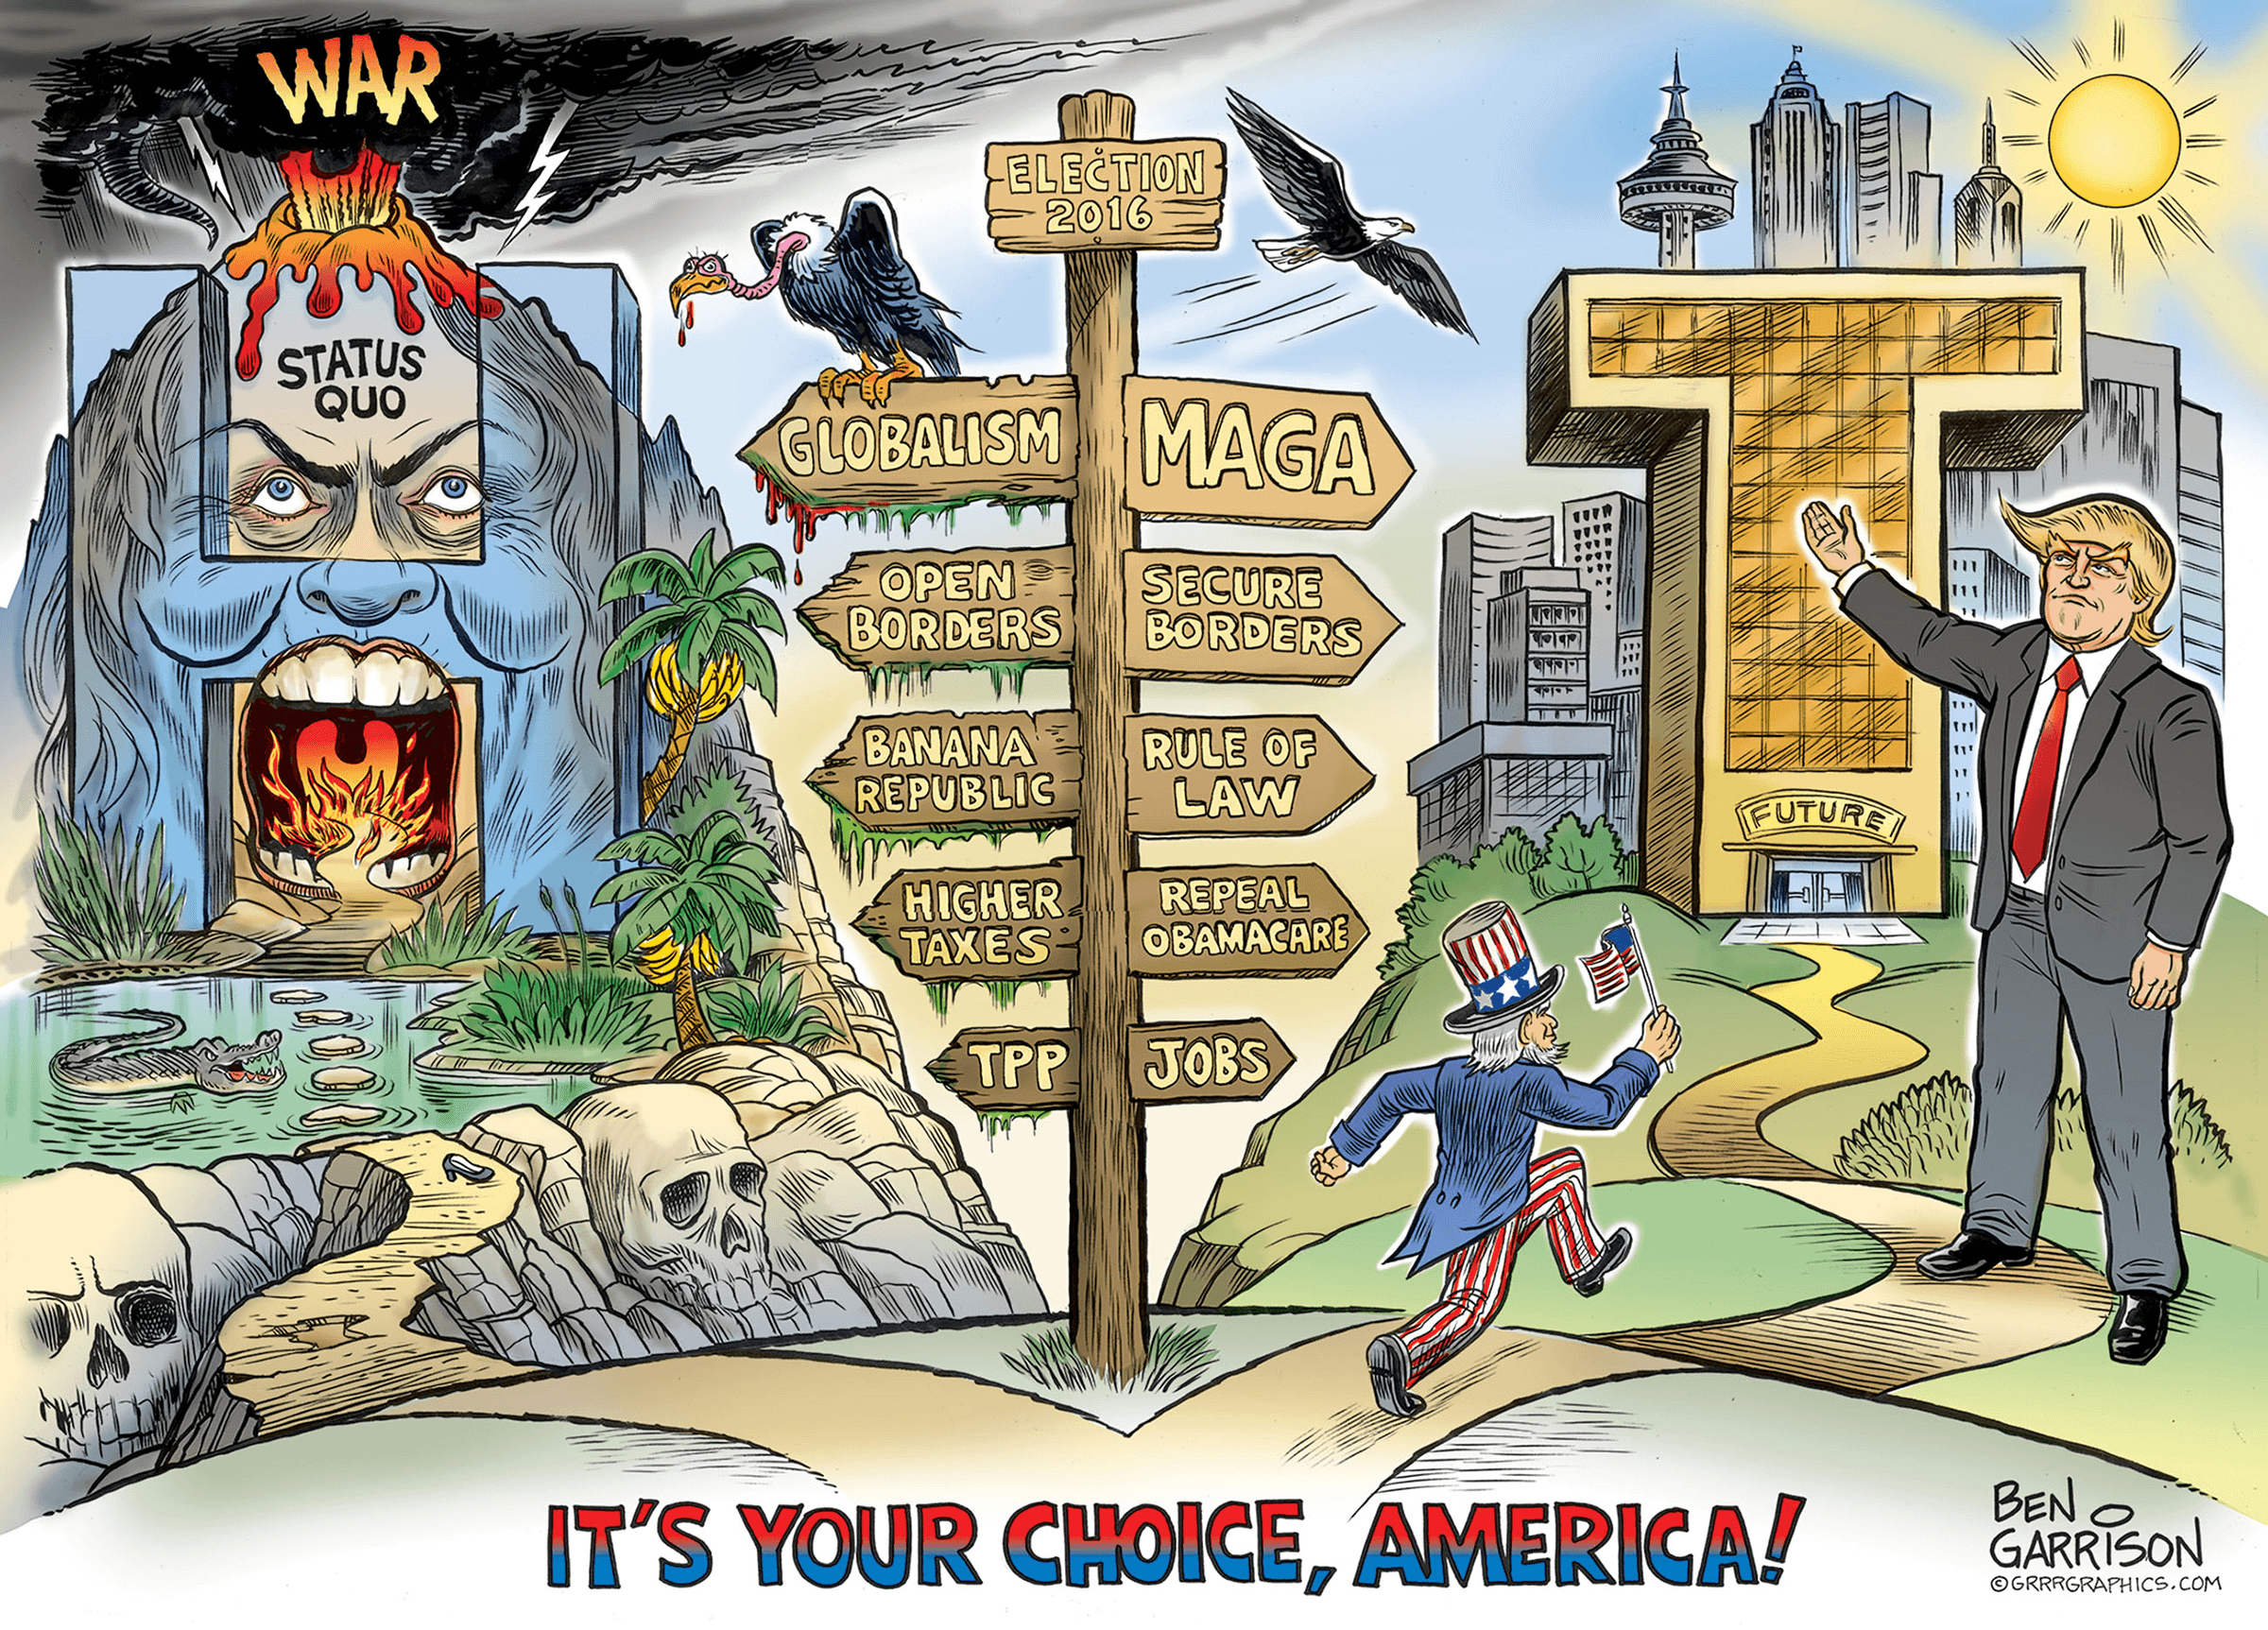 AMERICA'S CHOICE 2016  Iconic Ben Garrison Election Cartoon